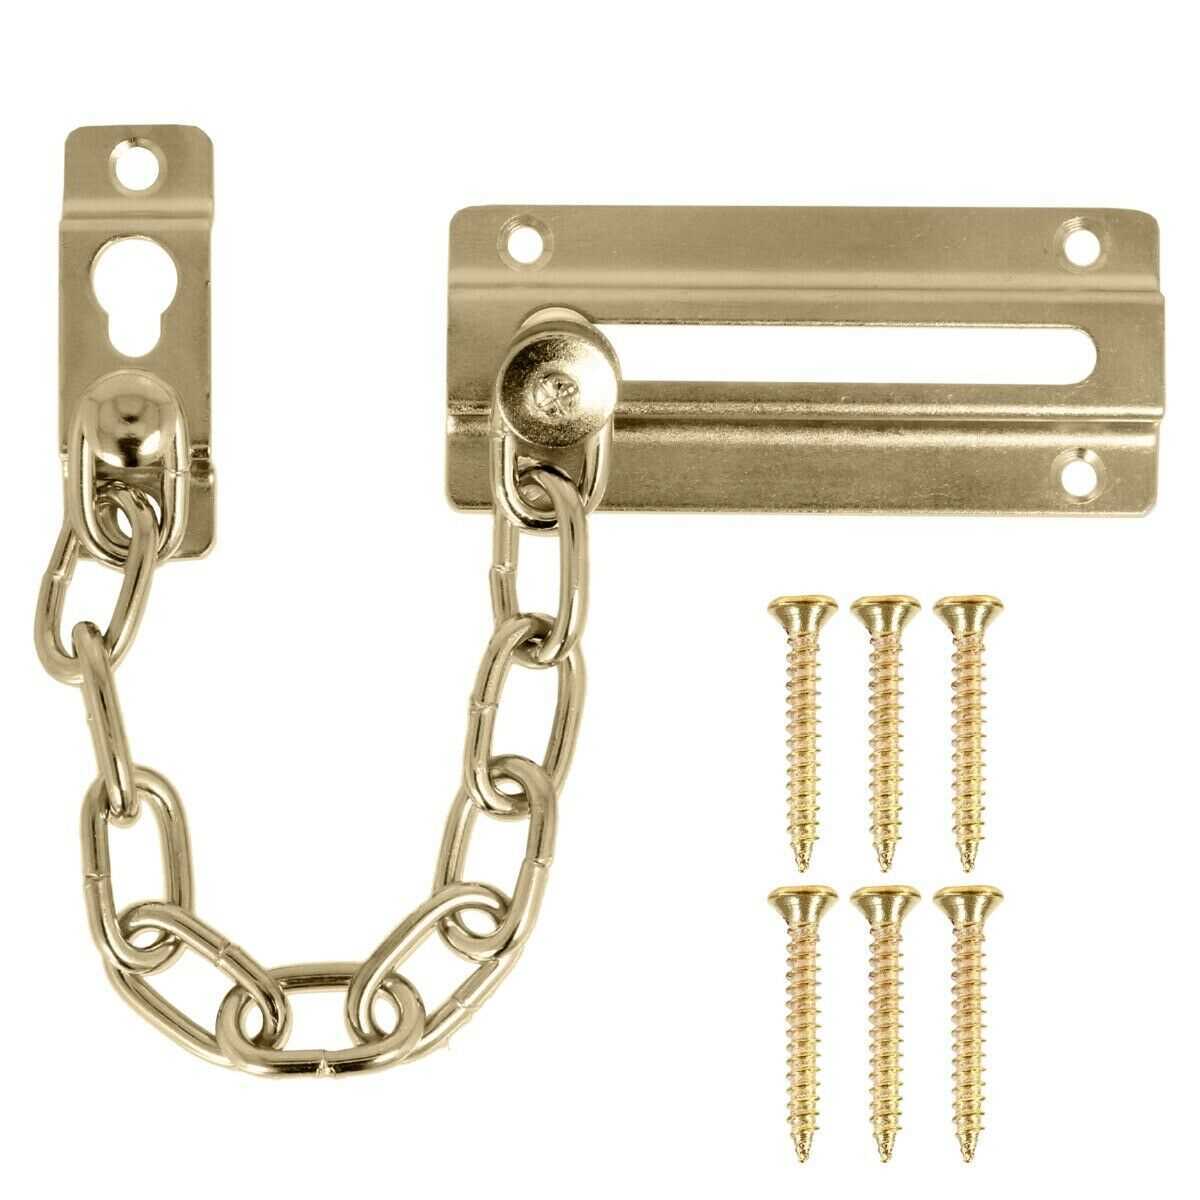 Brass Front Door Chain Restrictor Lock Latch Slide Catch Extra Security Safety